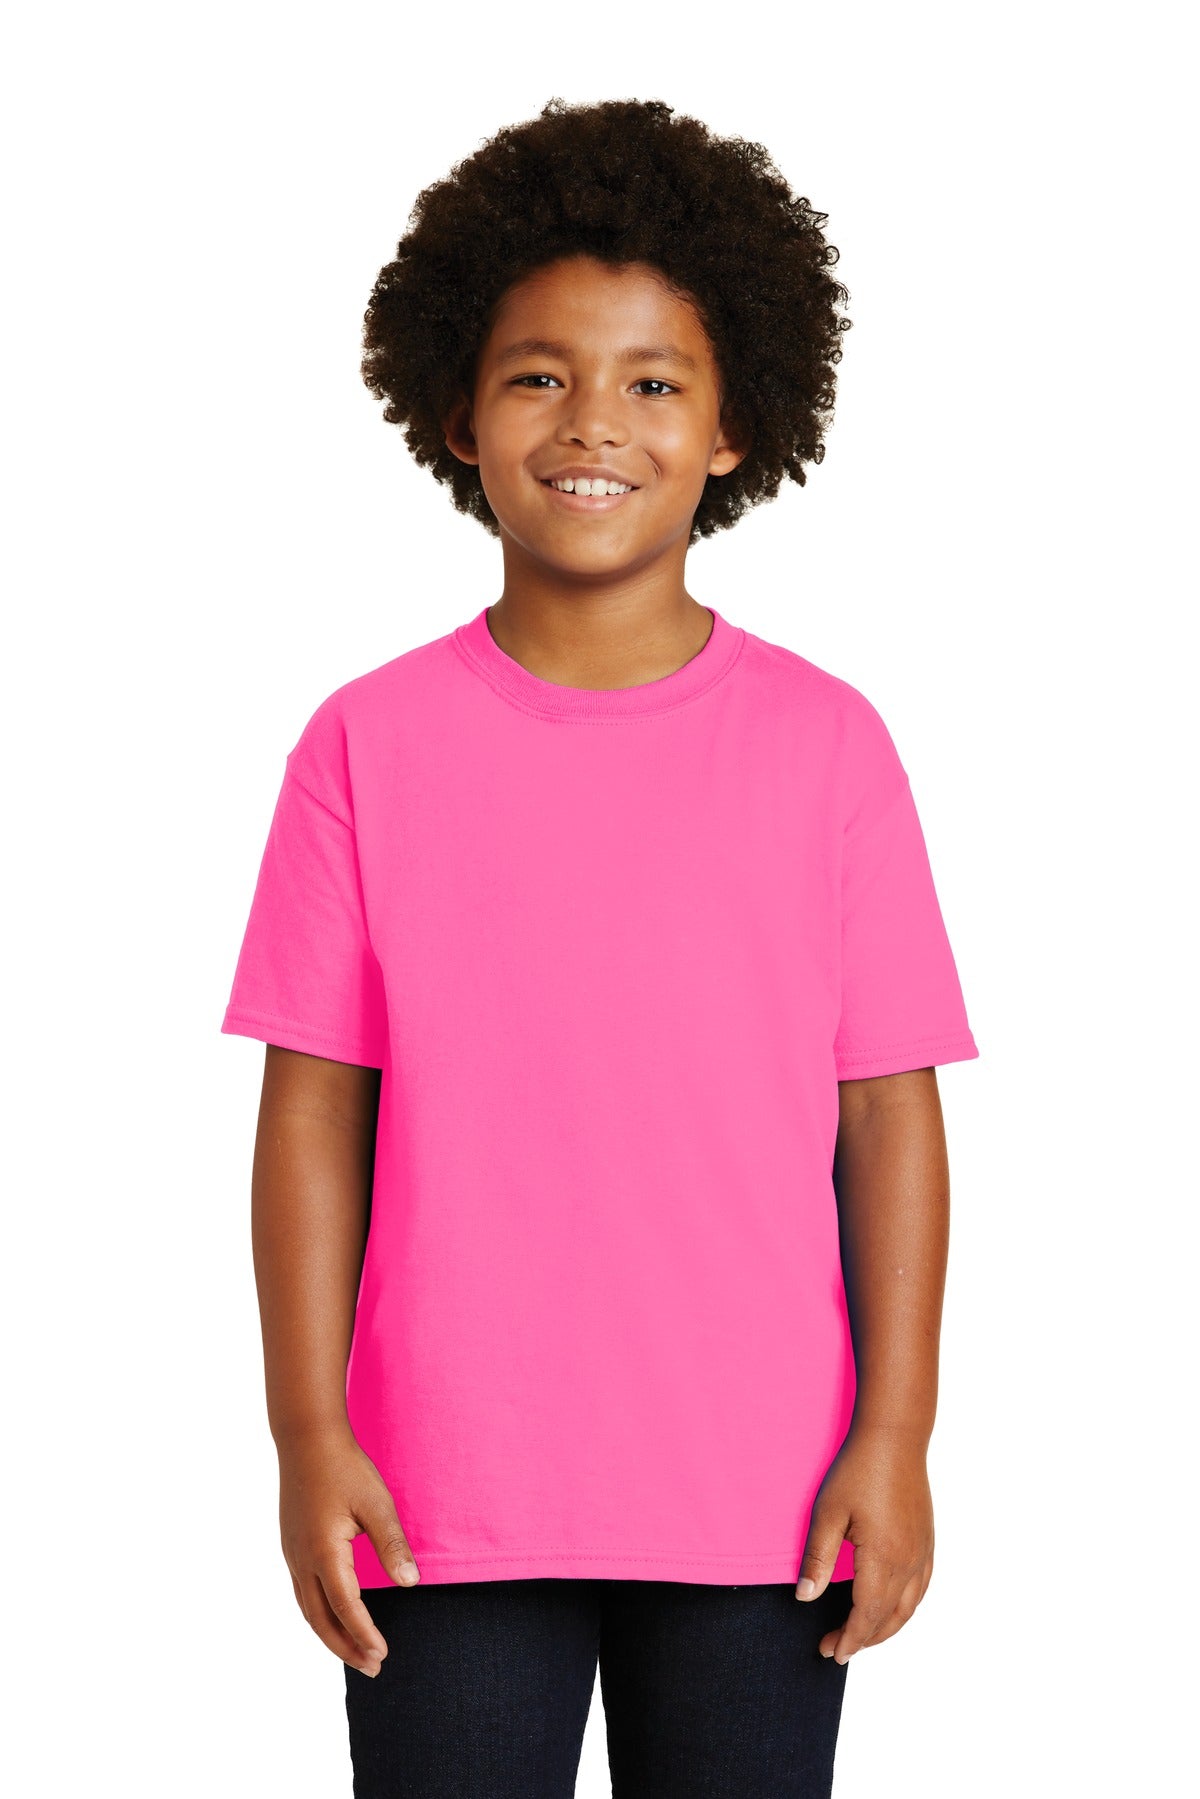 Gildan - Youth Ultra Cotton 100% US Cotton T-Shirt. 2000B - Safety Pink